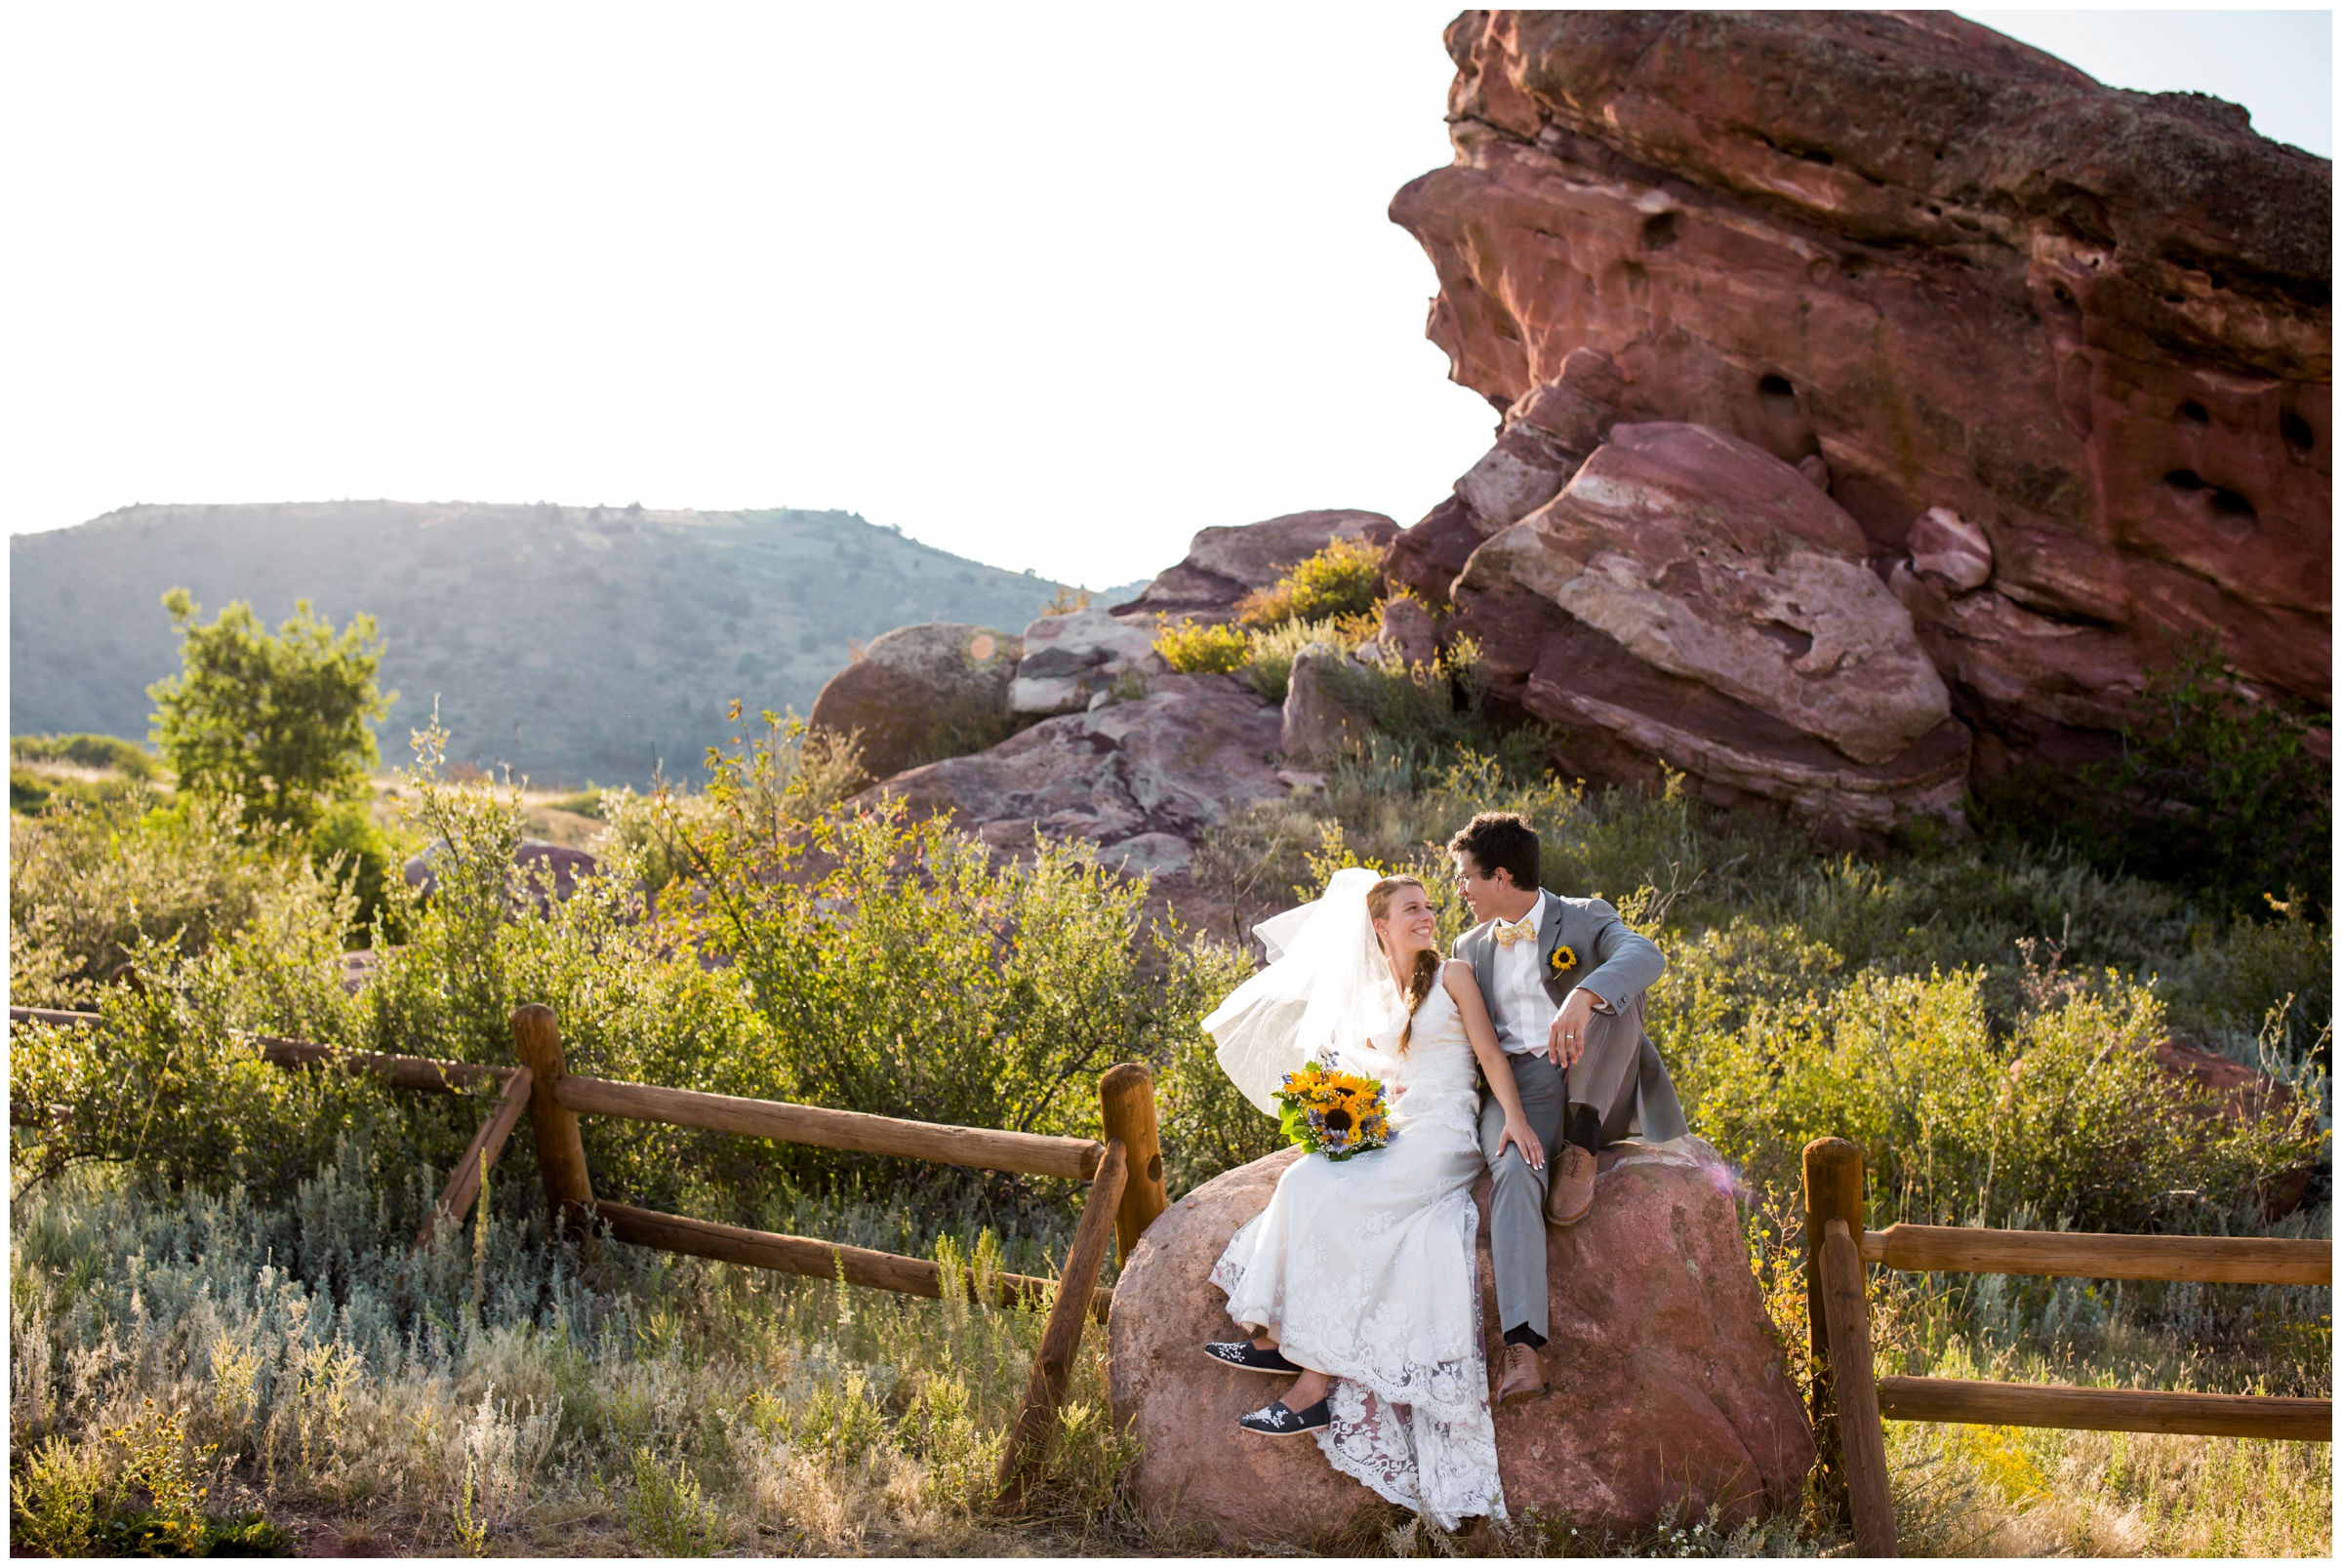 Red Rocks wedding photos by Colorado photographer Plum Pretty Photography